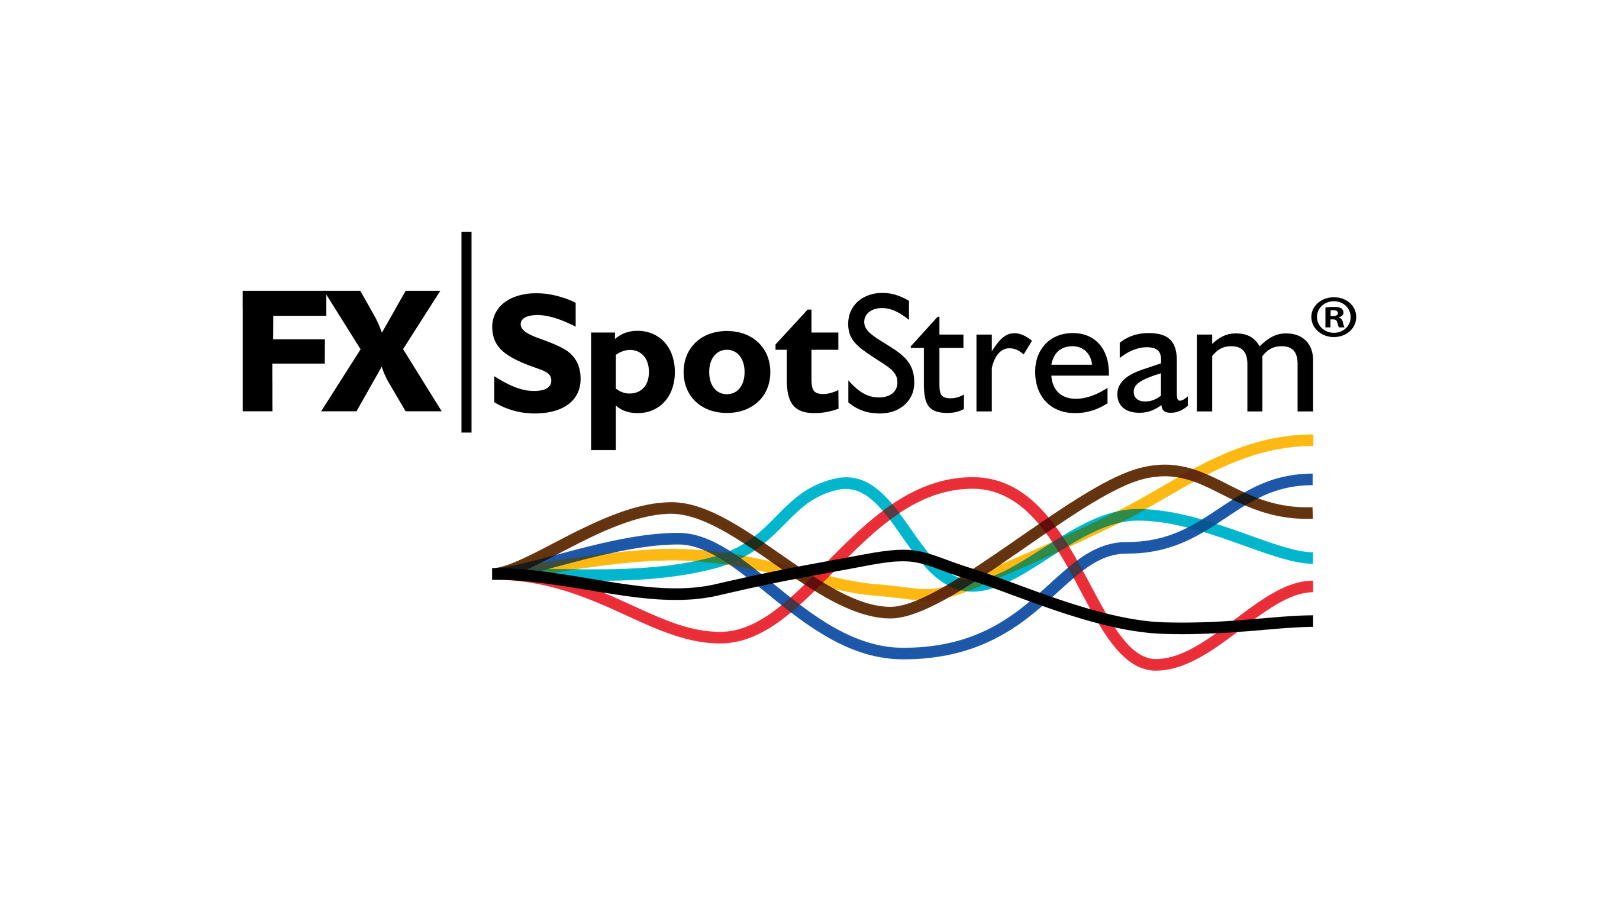 FXSpotStream Report June Volume Figures, Second Highest ADV Ever